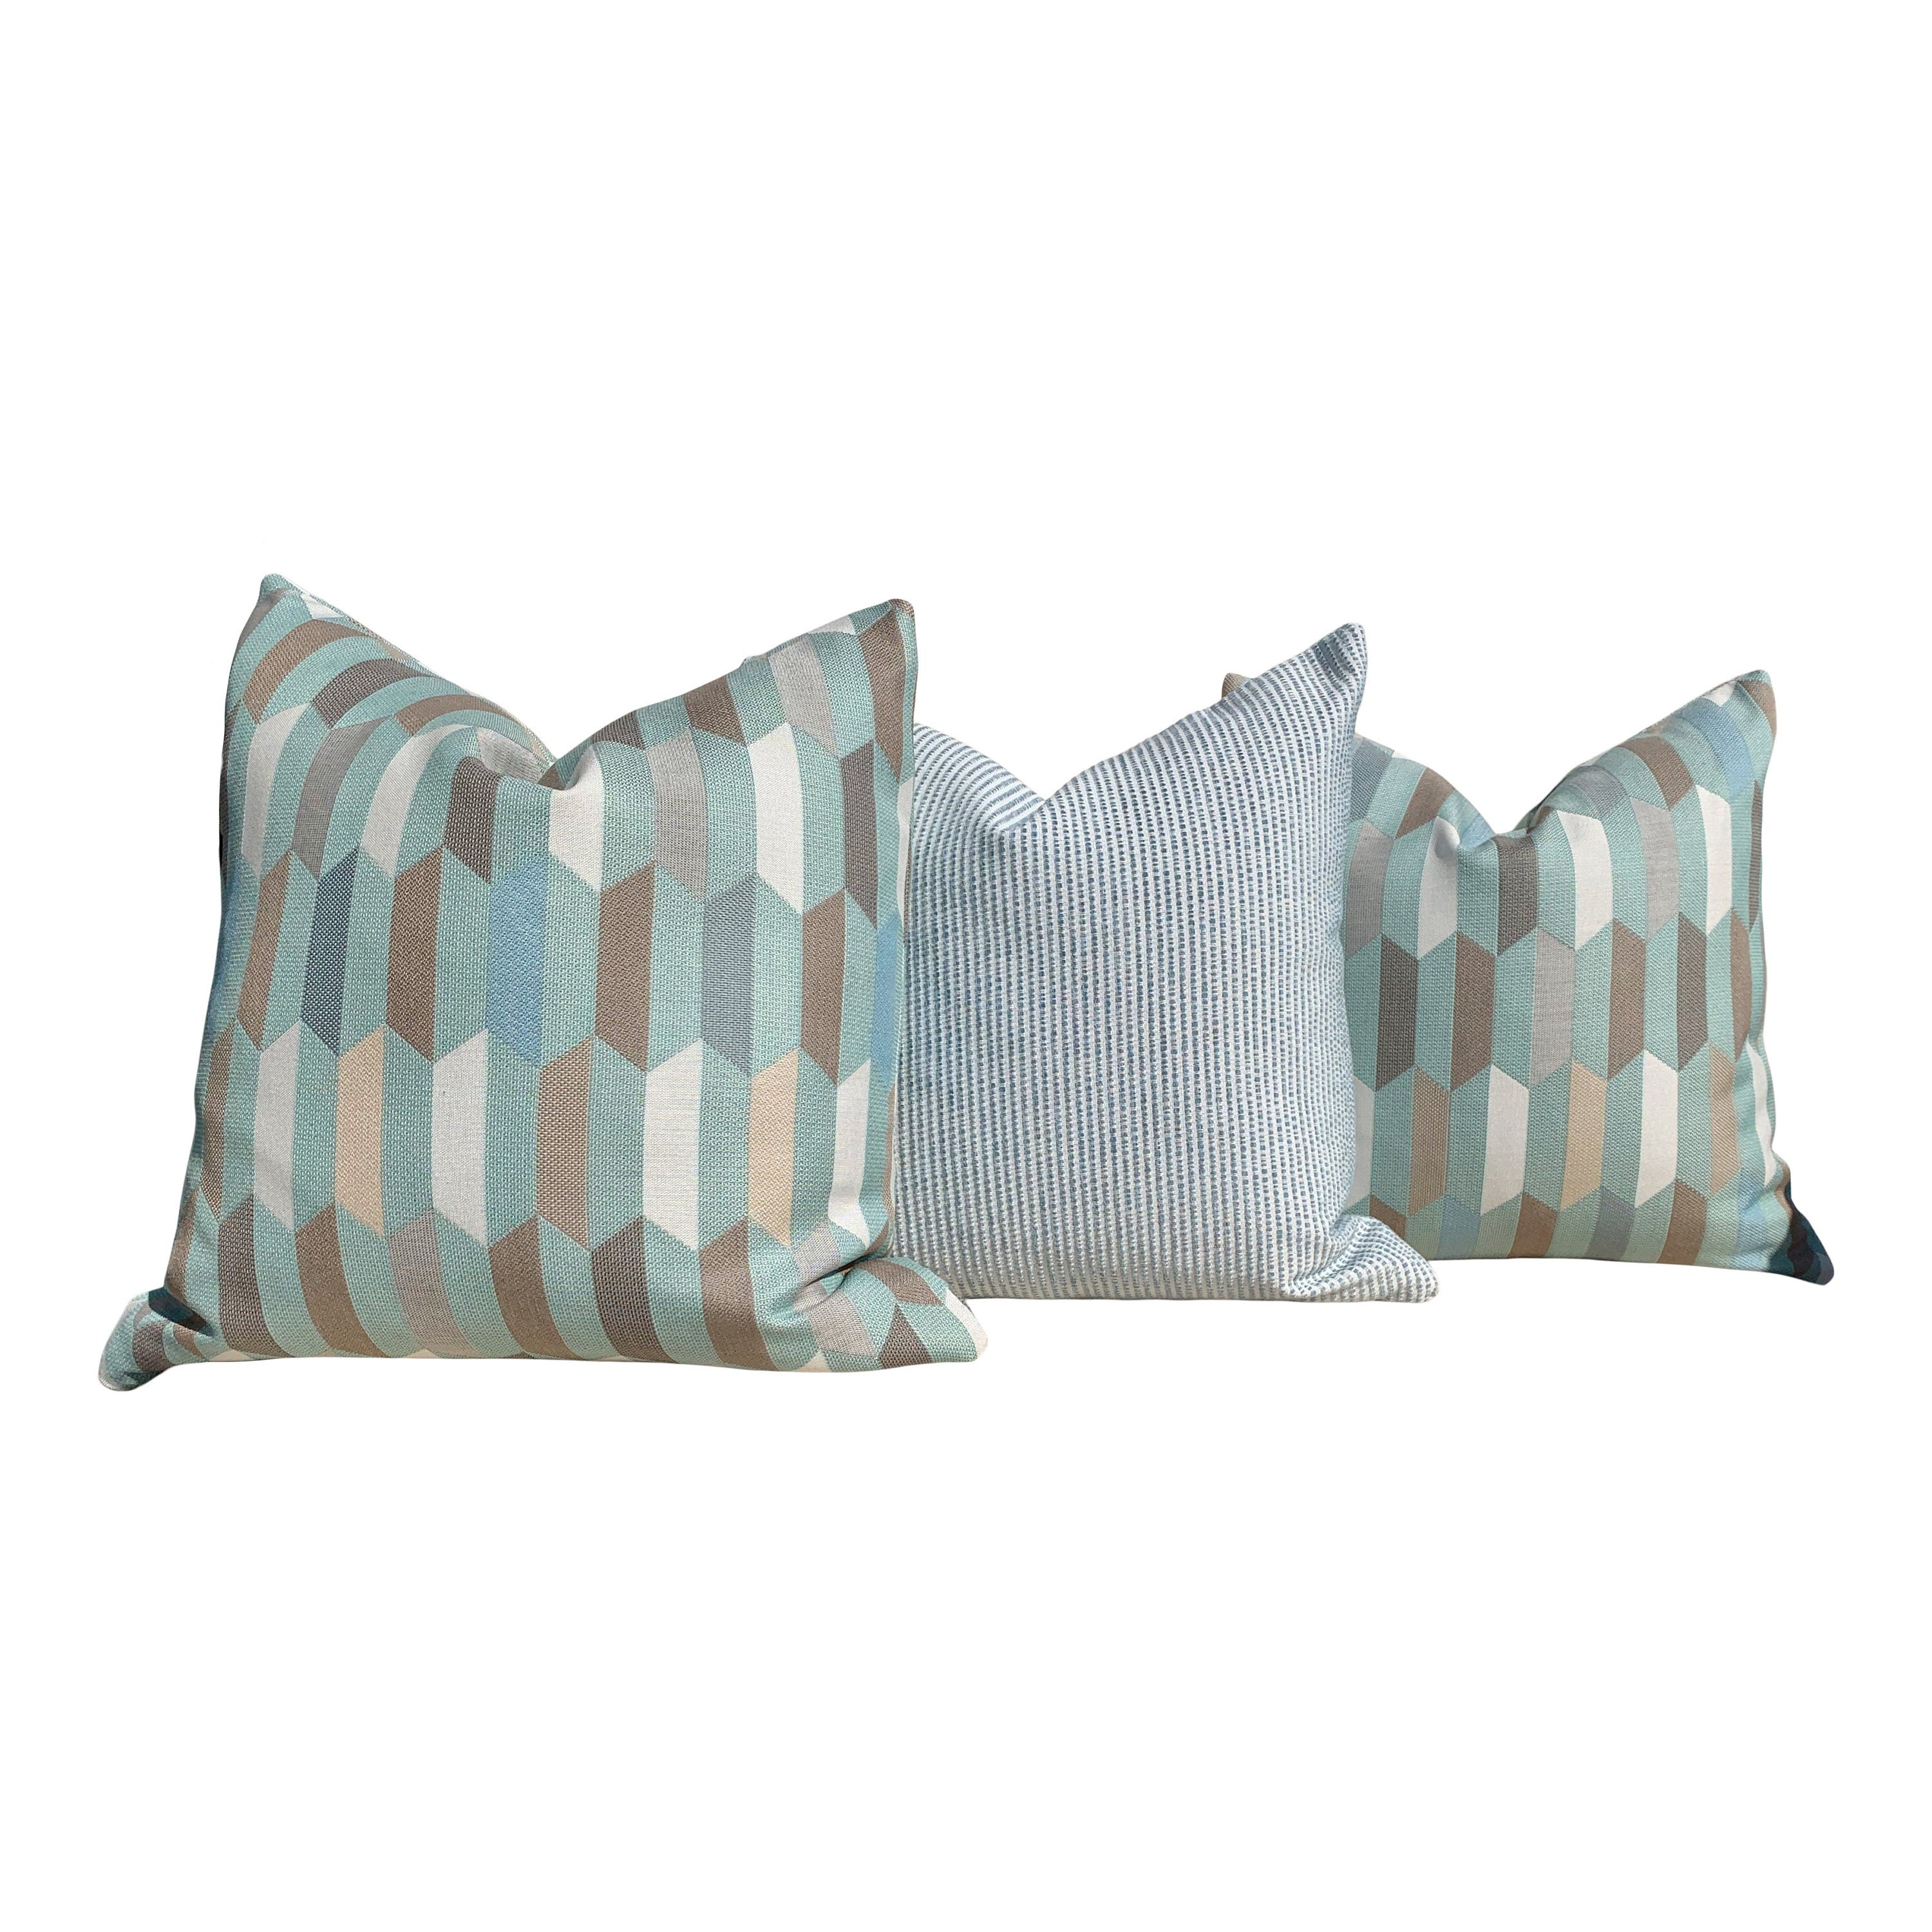 Sunbrella Geometric Outdoor Pillow in Aqua Green. Outdoor Lumbar Cushion Cover in Aqua, accent outdoor pillow, decorative cushion.